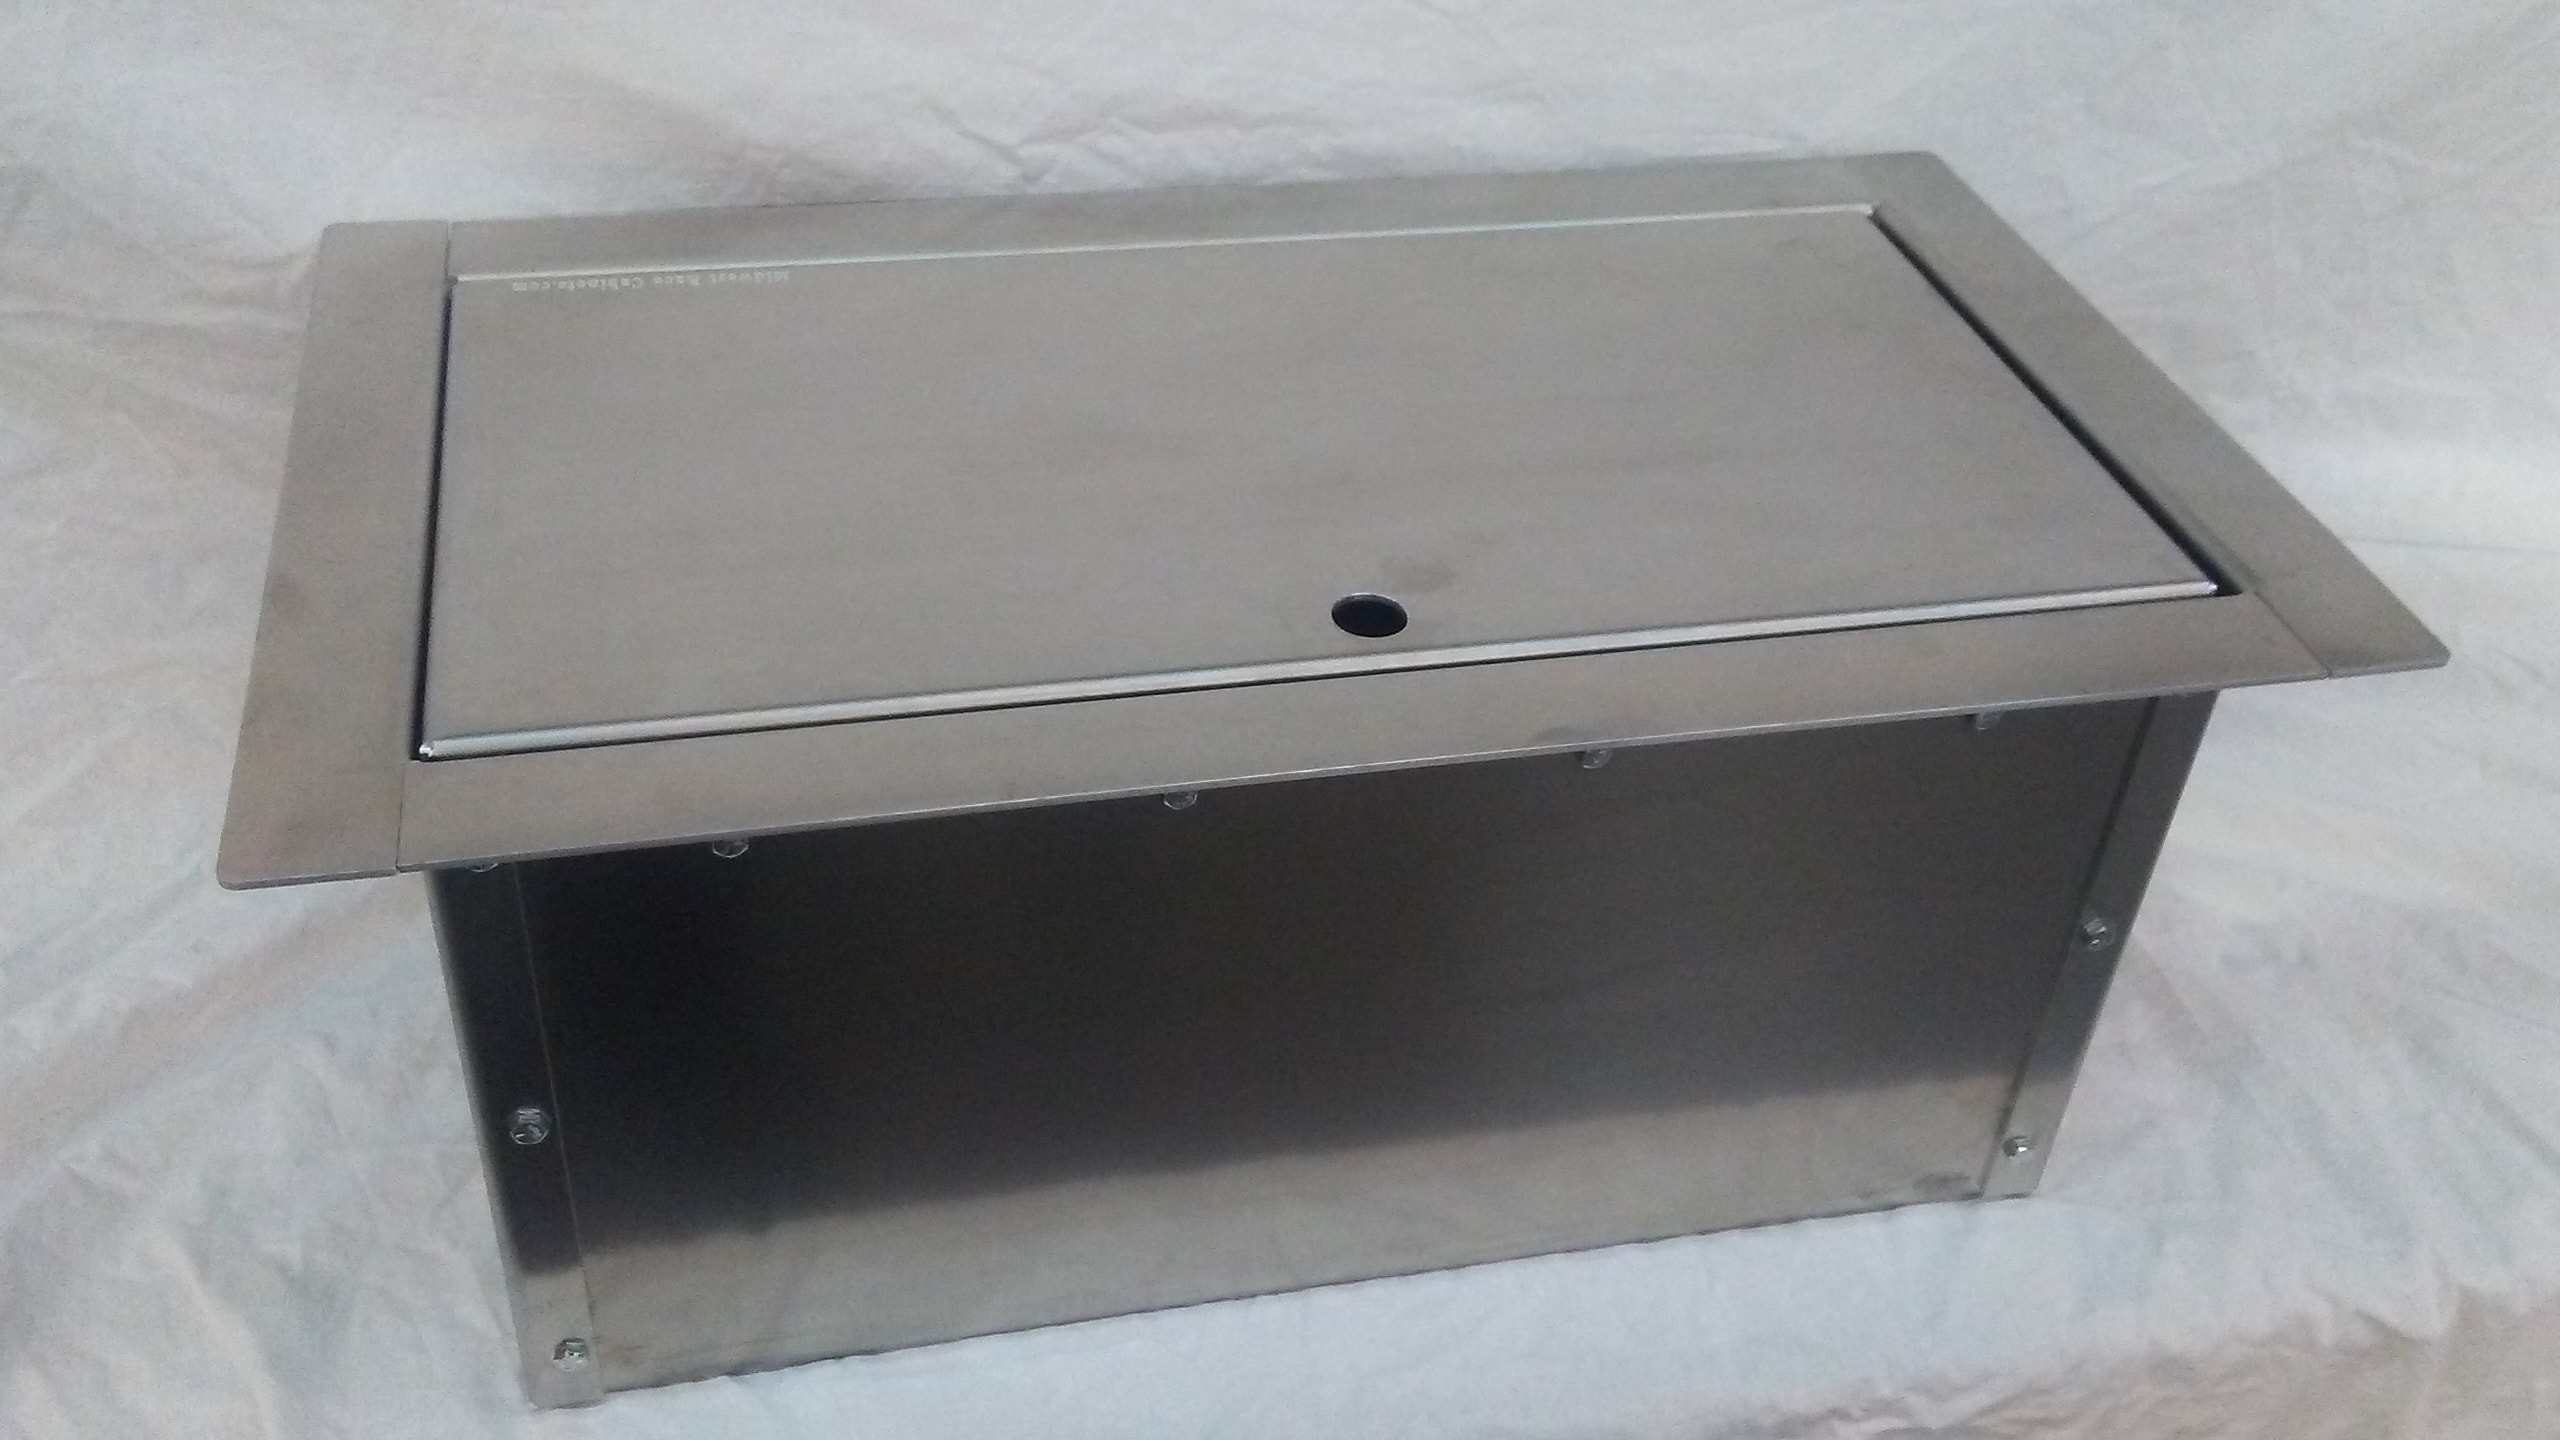 In floor storage box (Battery) Aluminum Finish or black